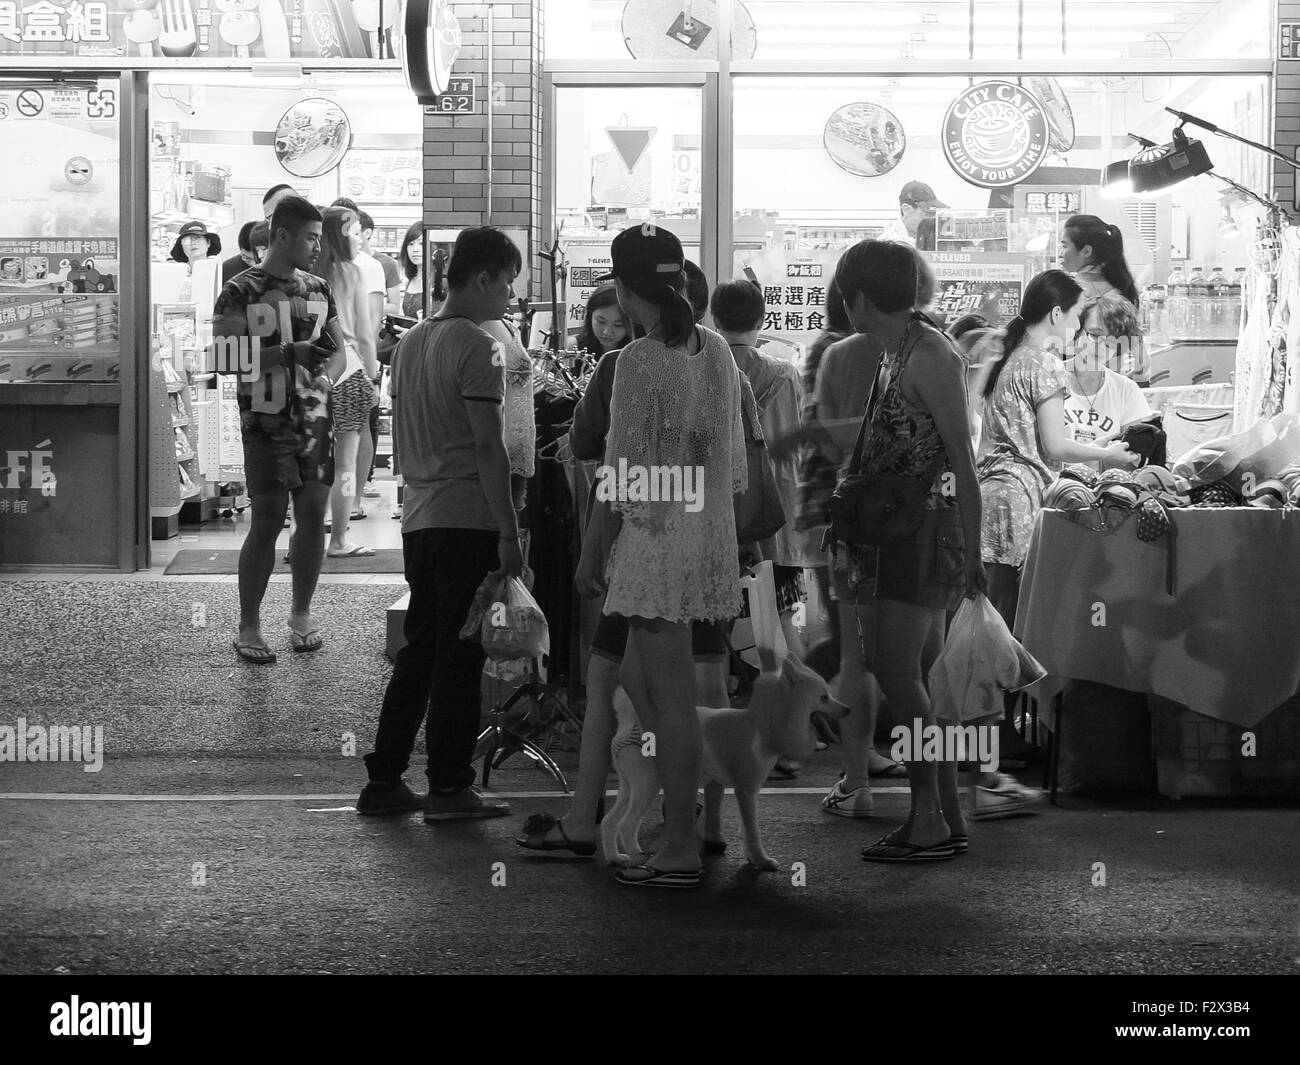 Night market scene in Taiwan. Stock Photo